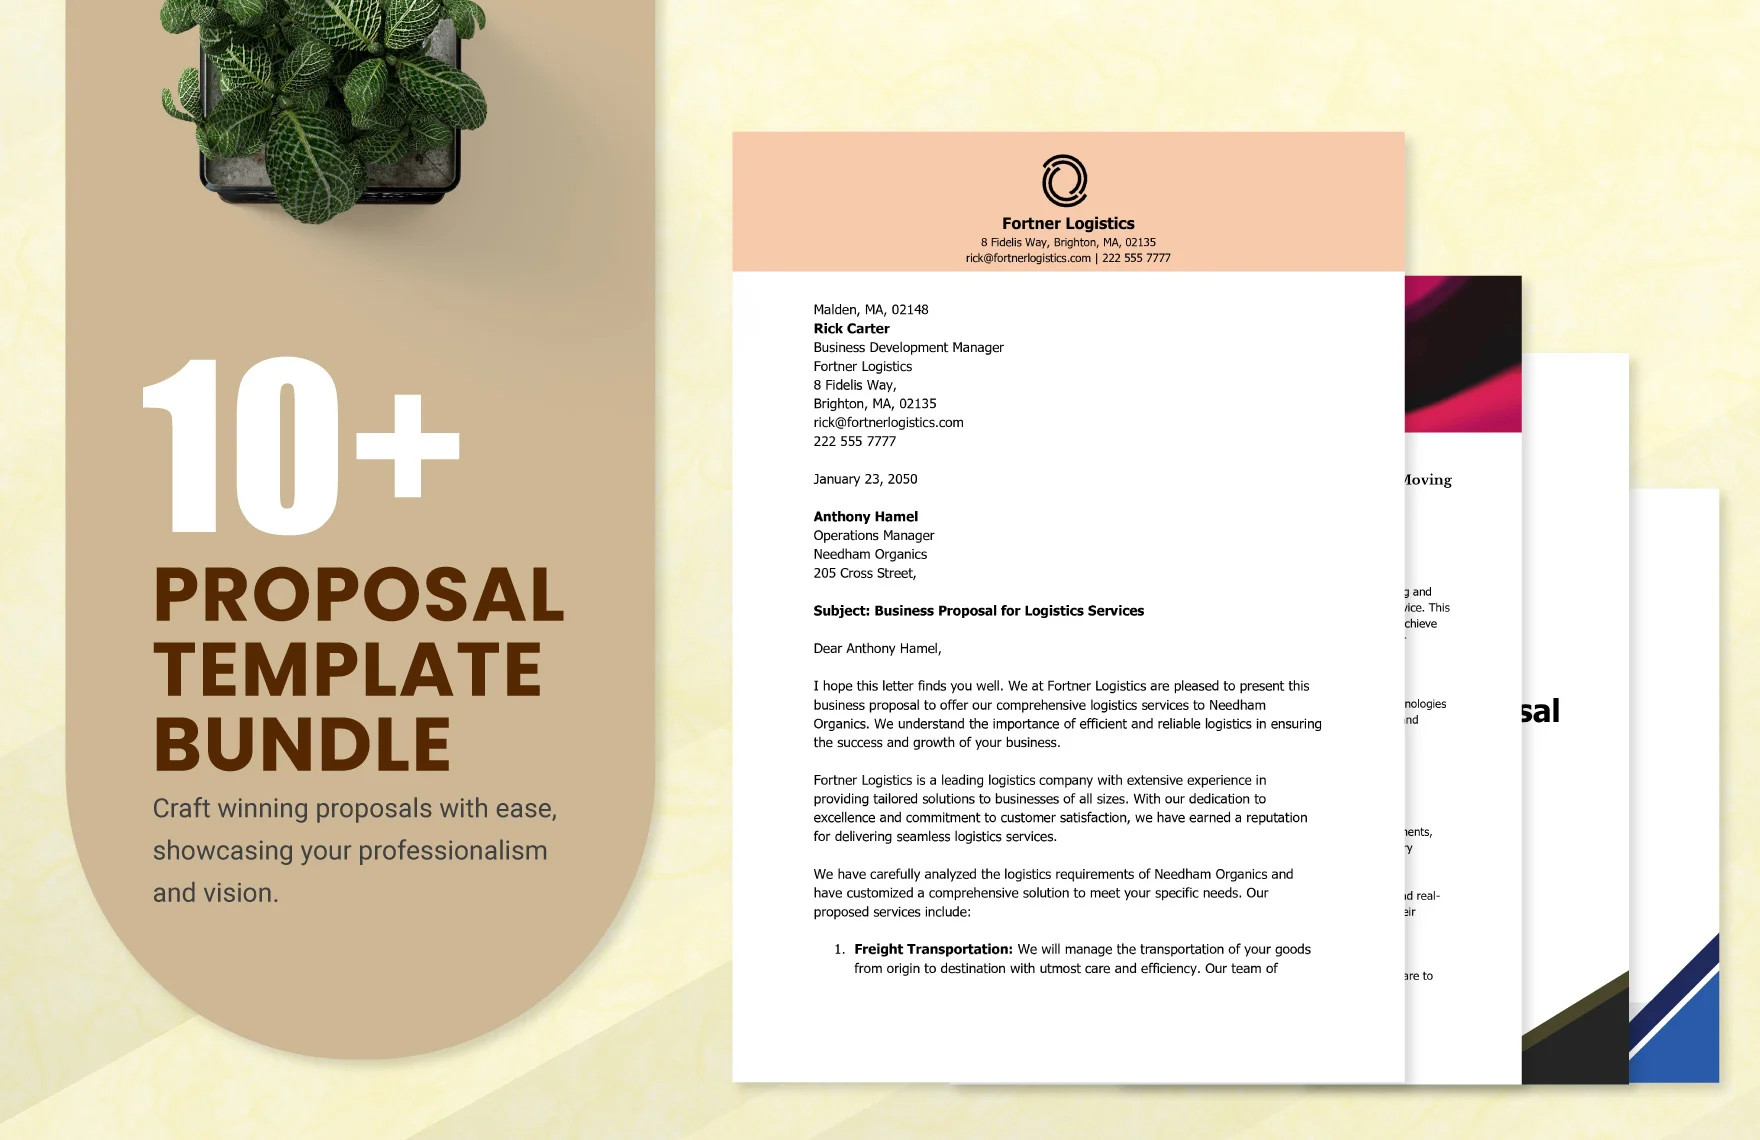 10 proposal template bundle